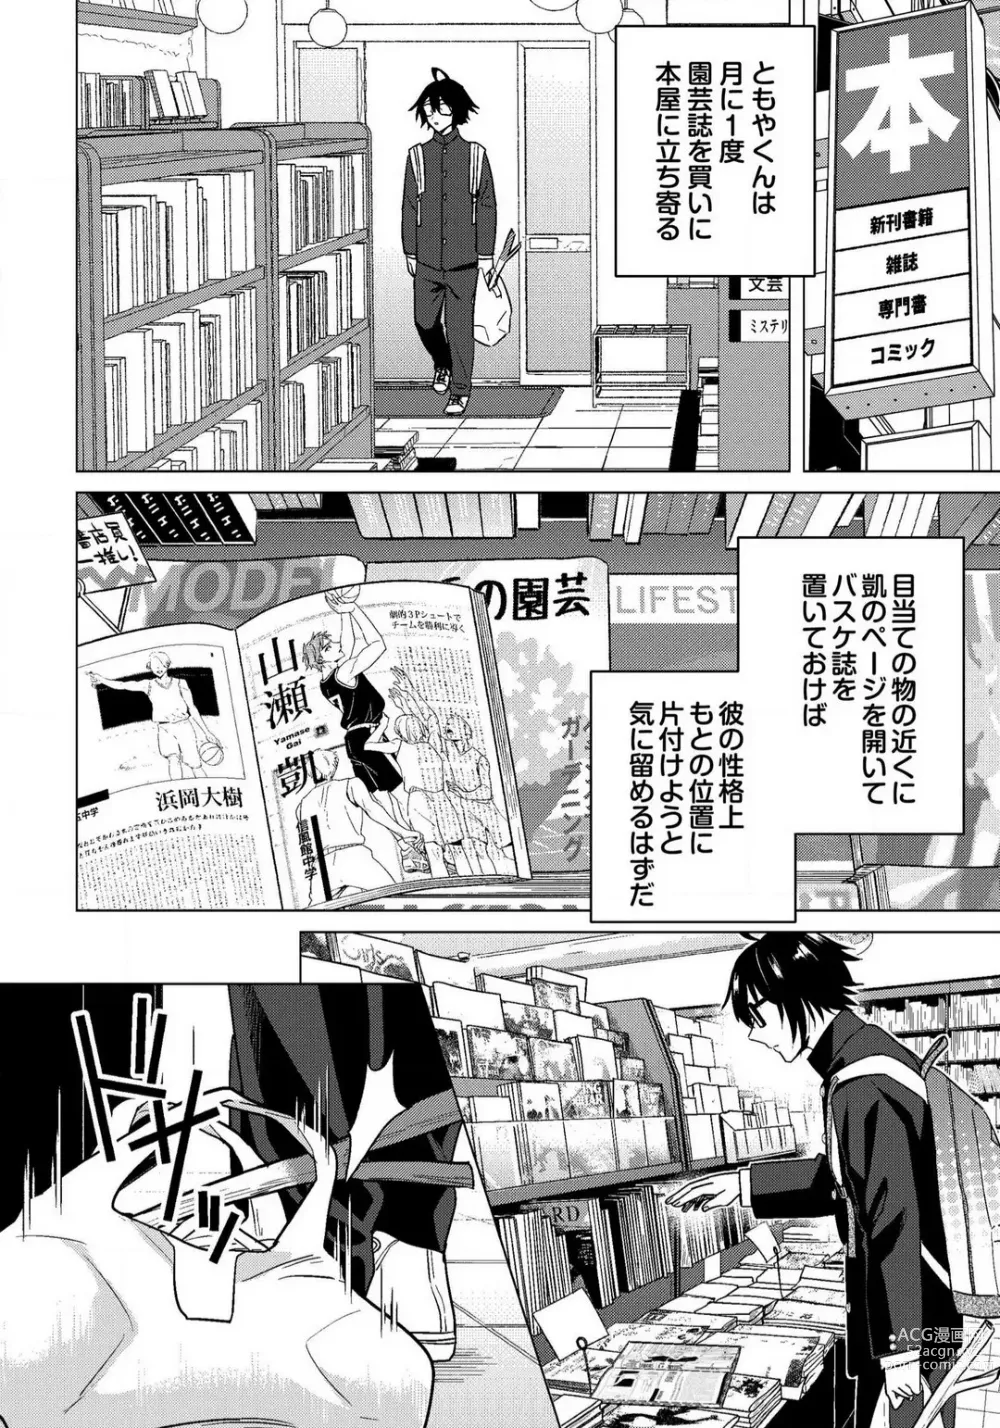 Page 39 of manga Ijimerare - Onna